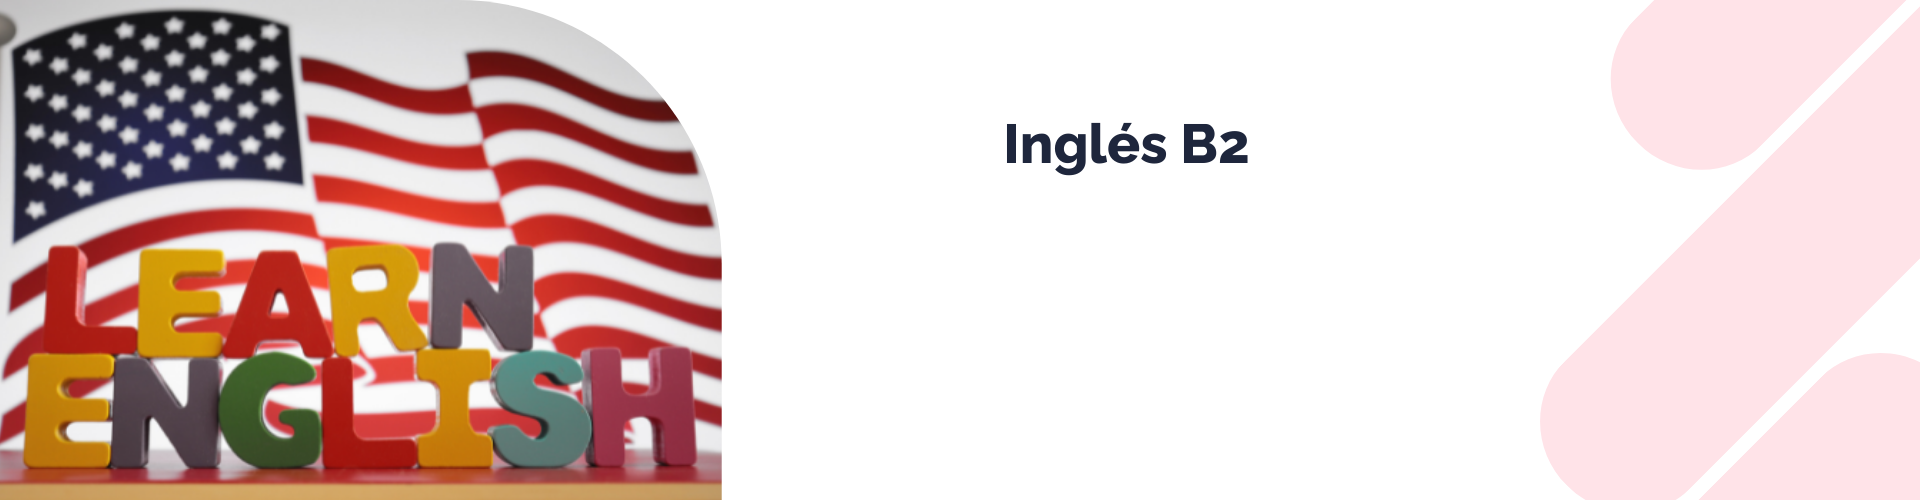 ingles b2